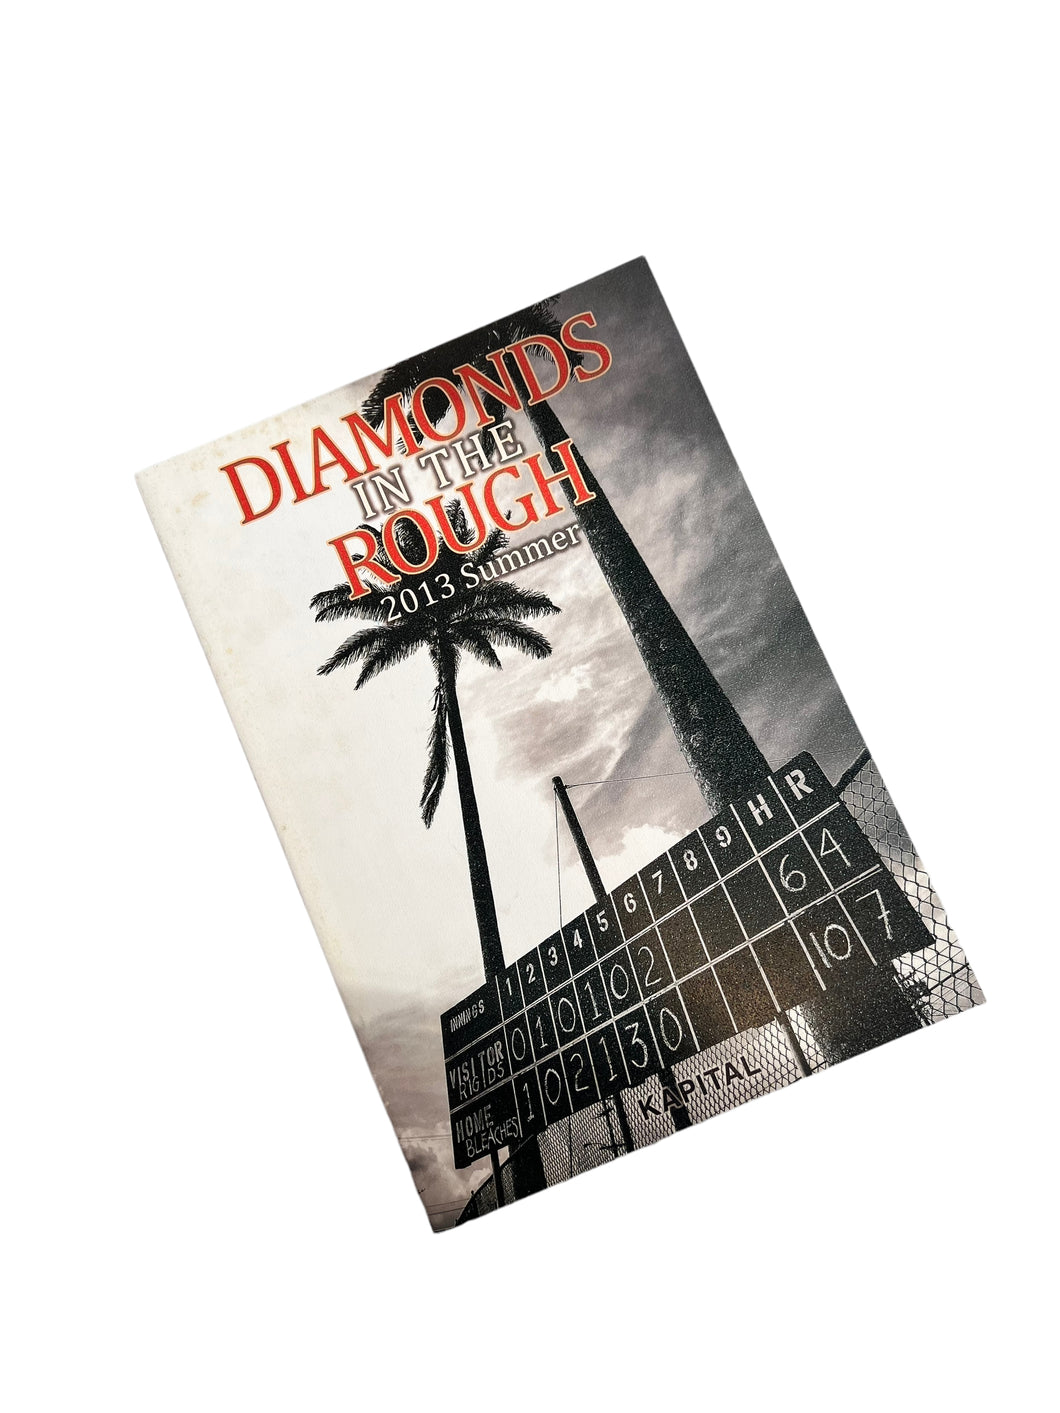 2013 Kapital “Diamonds in the Rough” Summer Lookbook